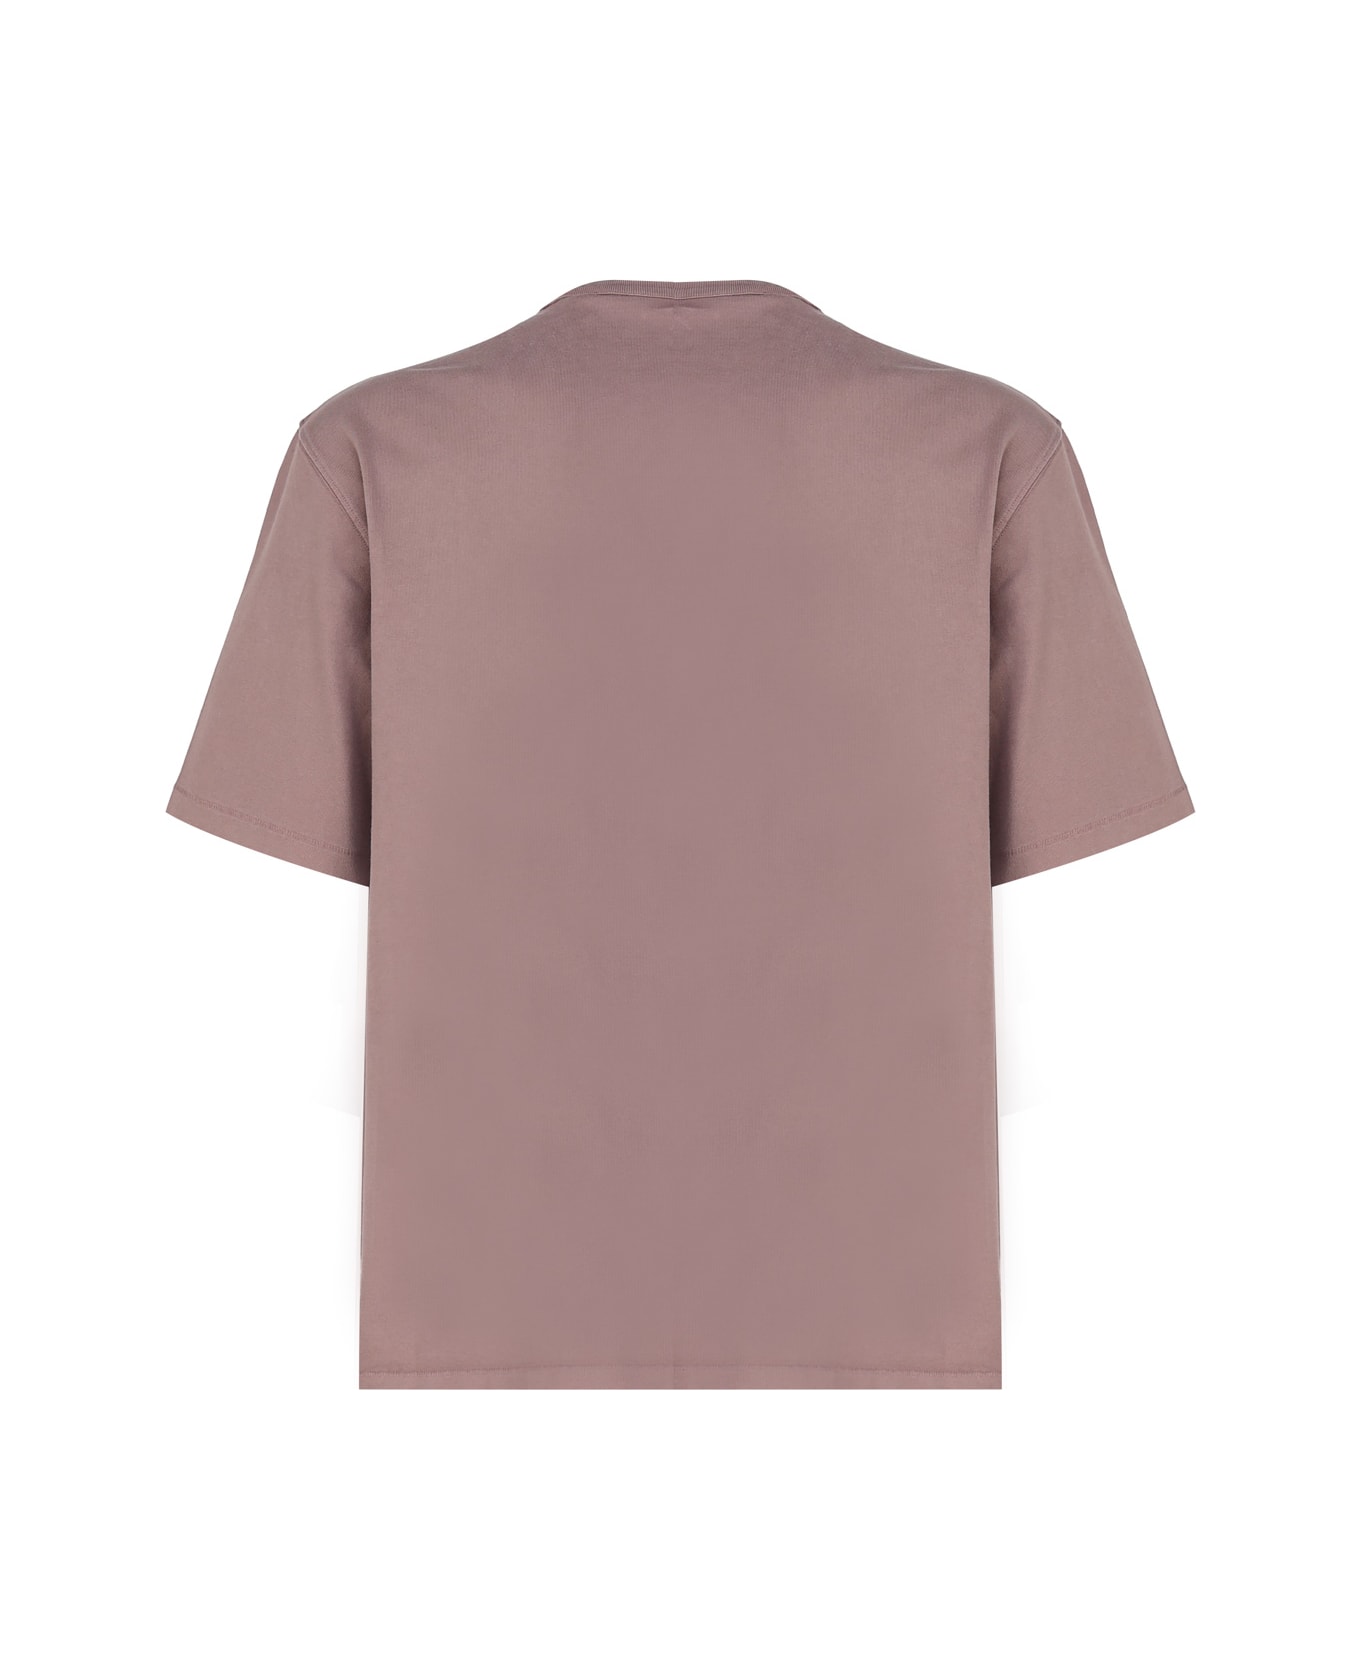 Moncler Genius Moncler X Salehe Bembury T-shirt - Dusty pink